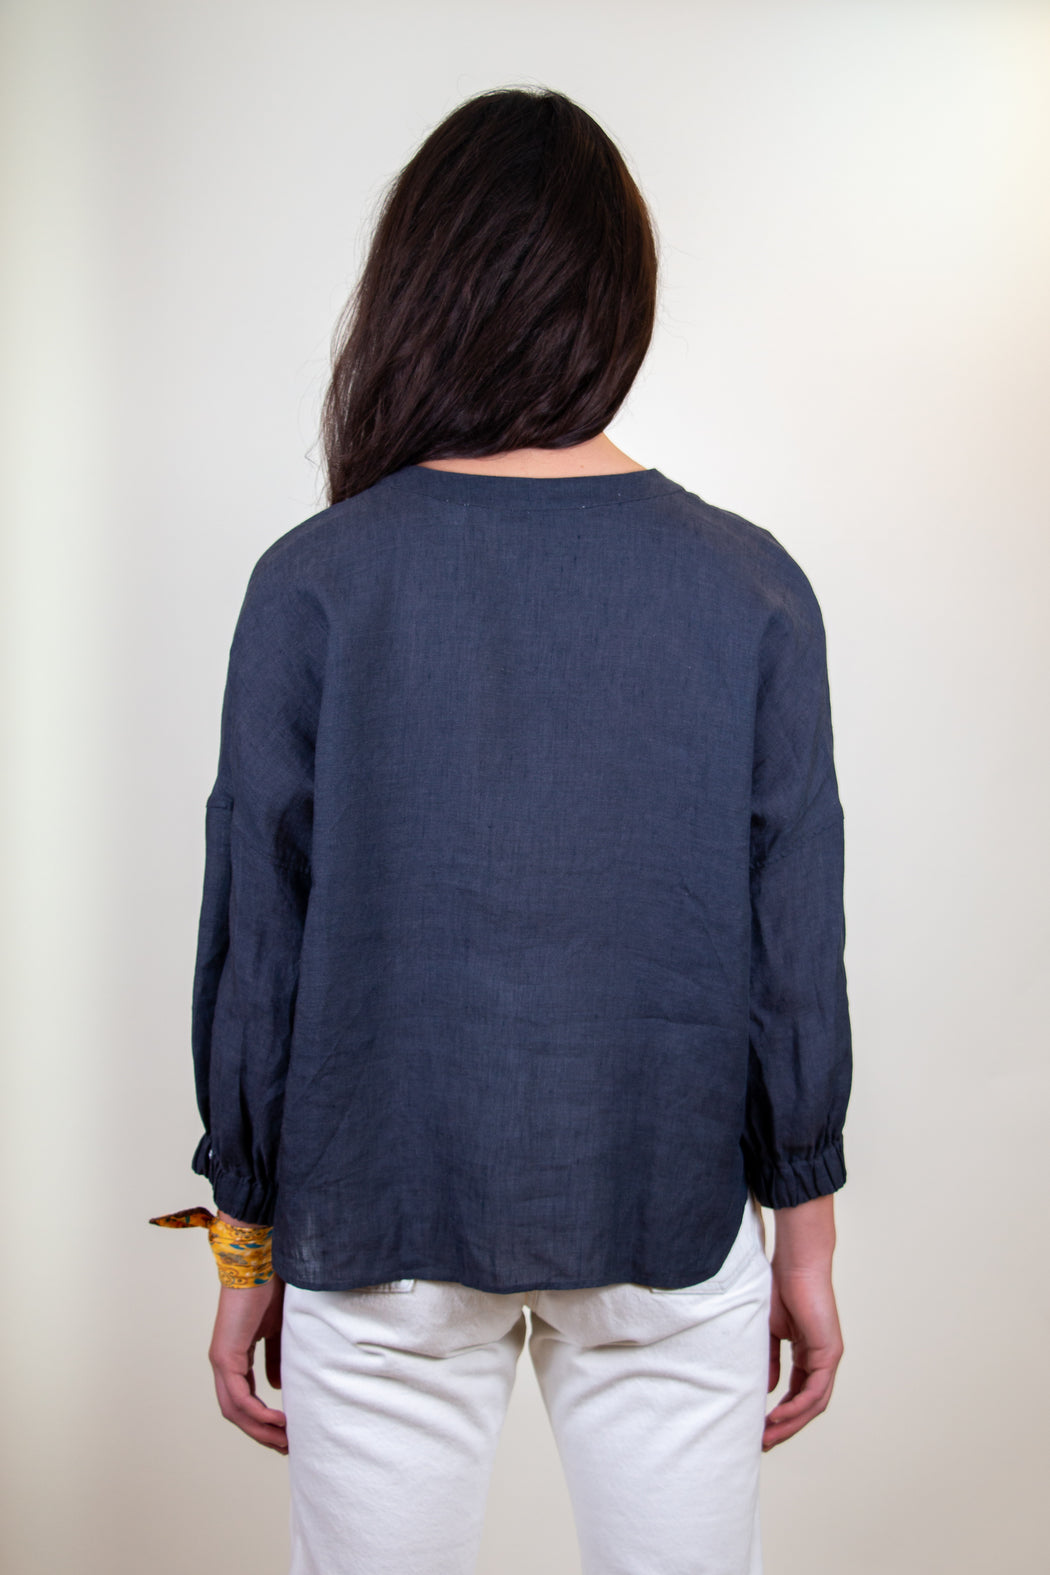 Back view:  Model wearing blue grey long sleeve shirt